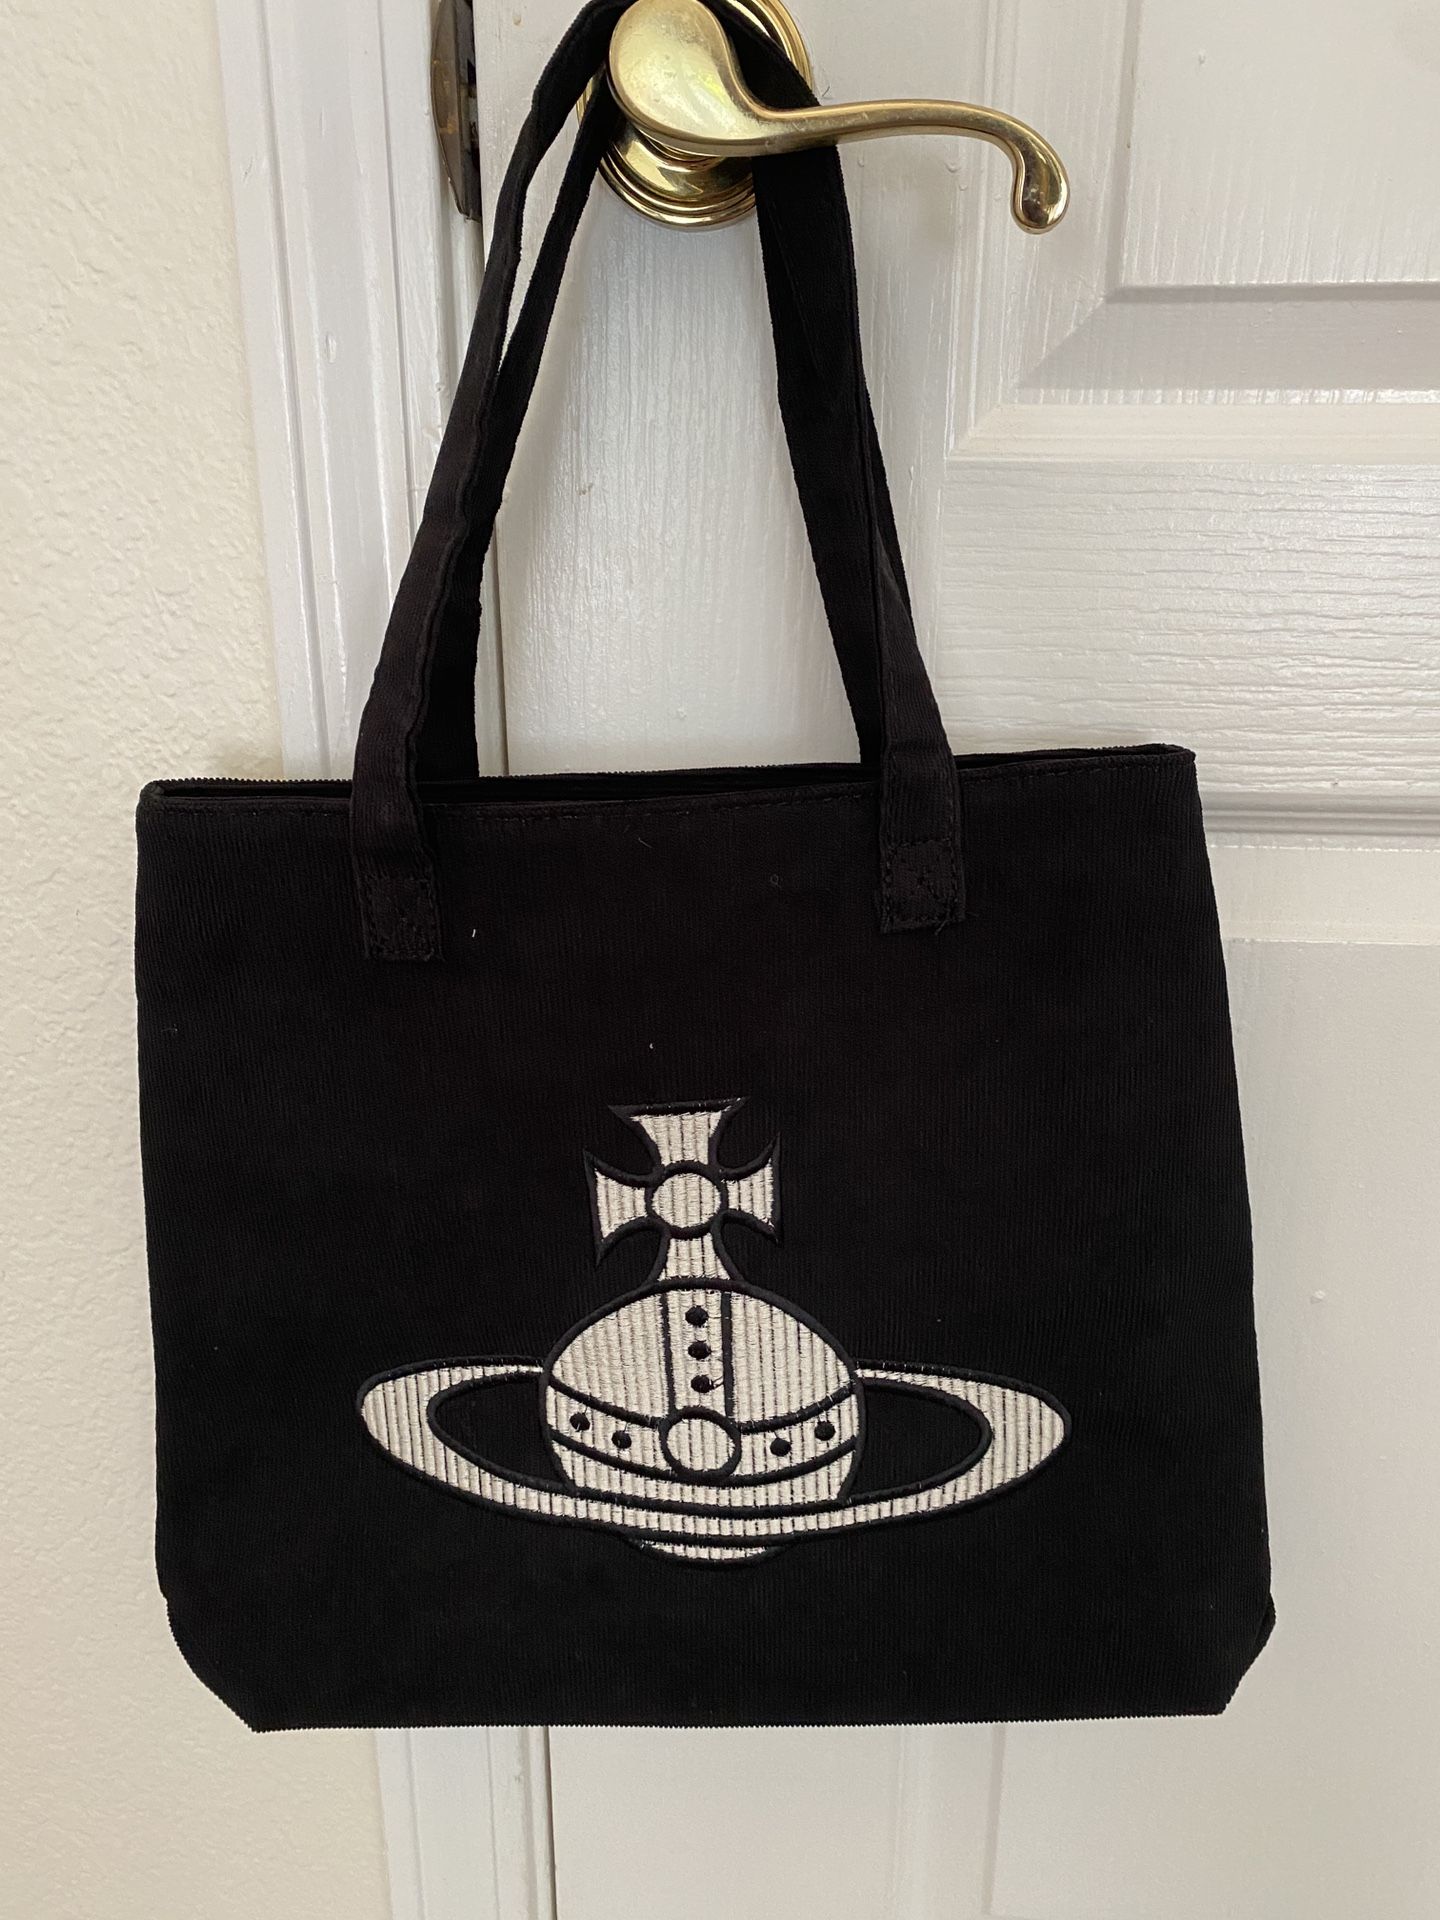 New Black Corduroy Tote Bag